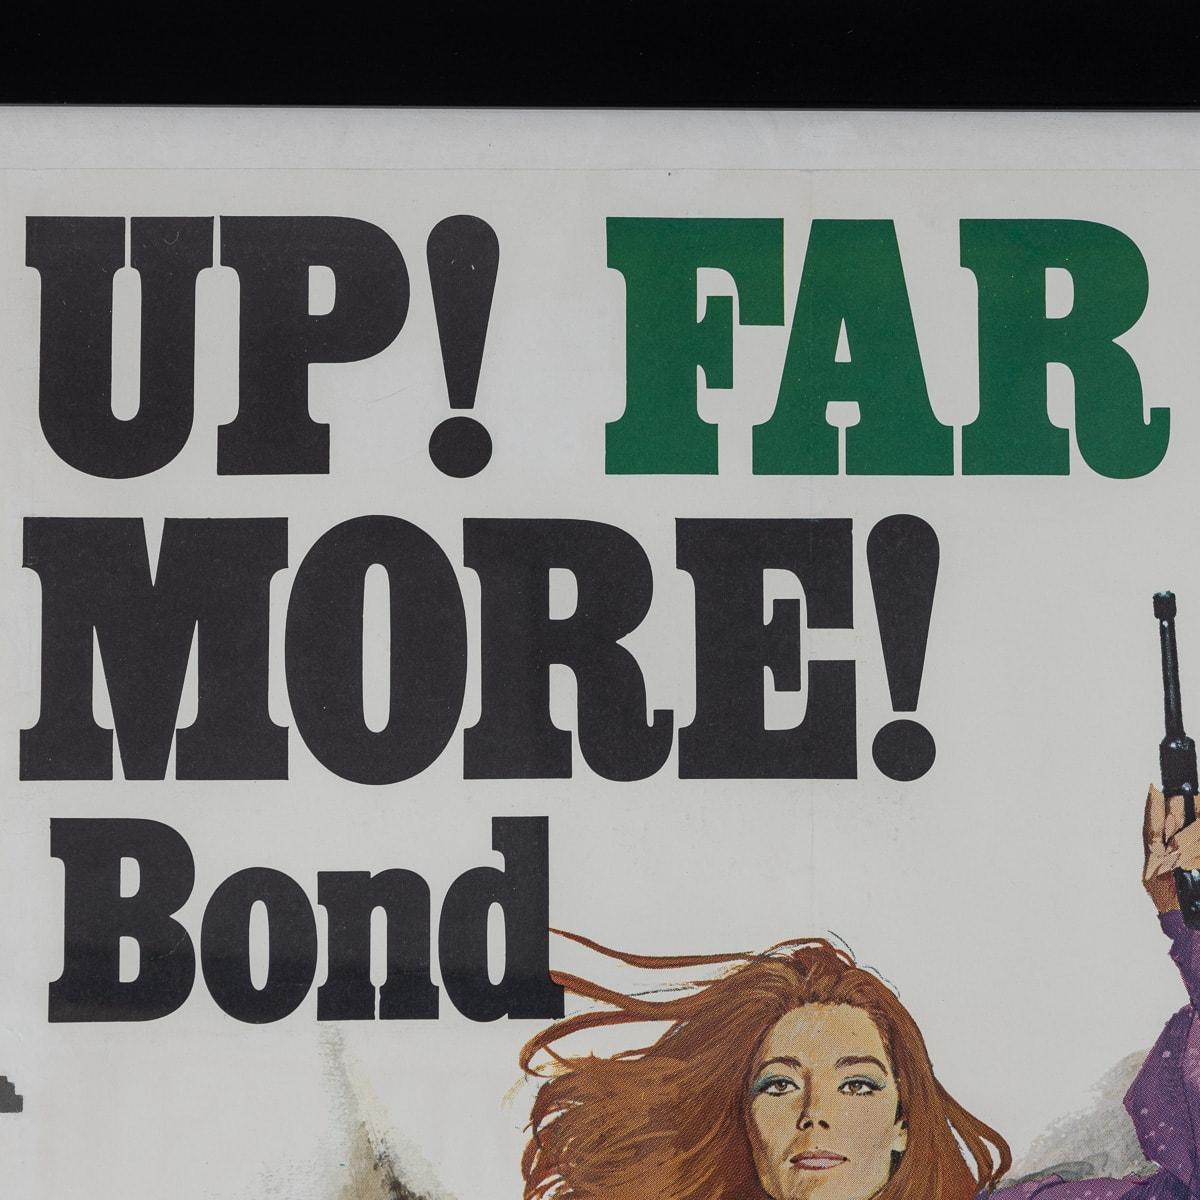 Other U.S Release James Bond 007 'On Her Majesty's Secret Service' Poster c.1969 For Sale